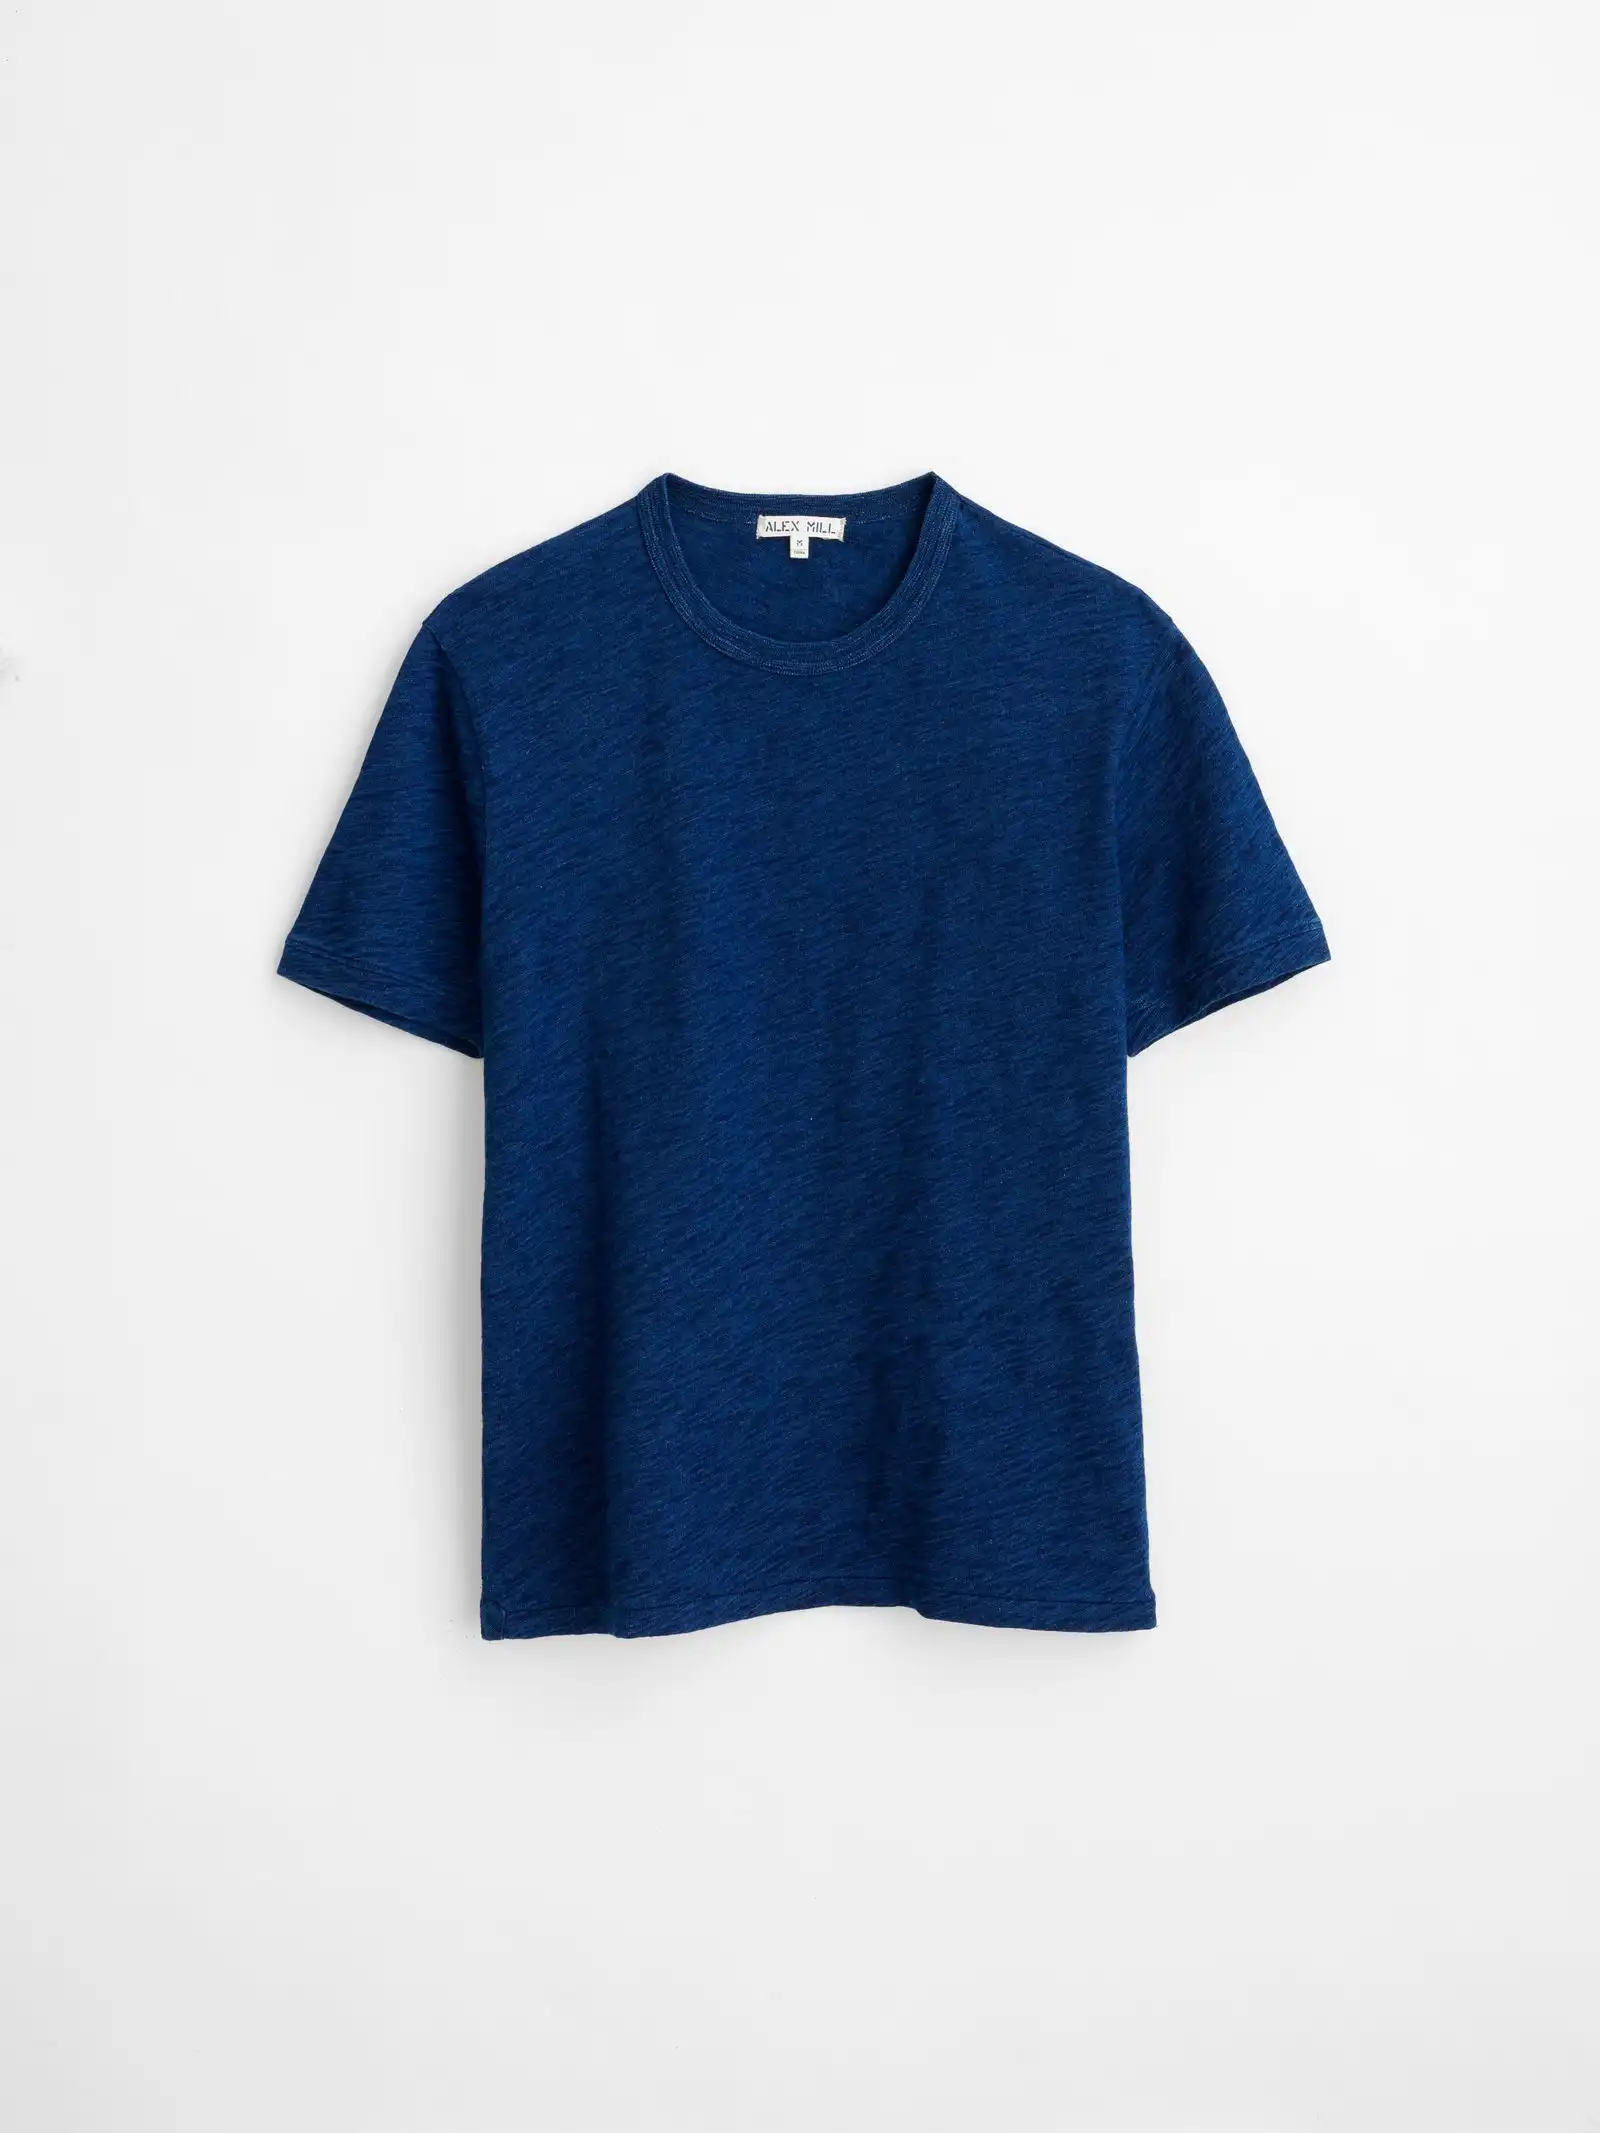 Alex Mill Standard T-Shirt in Indigo Slub Cotton